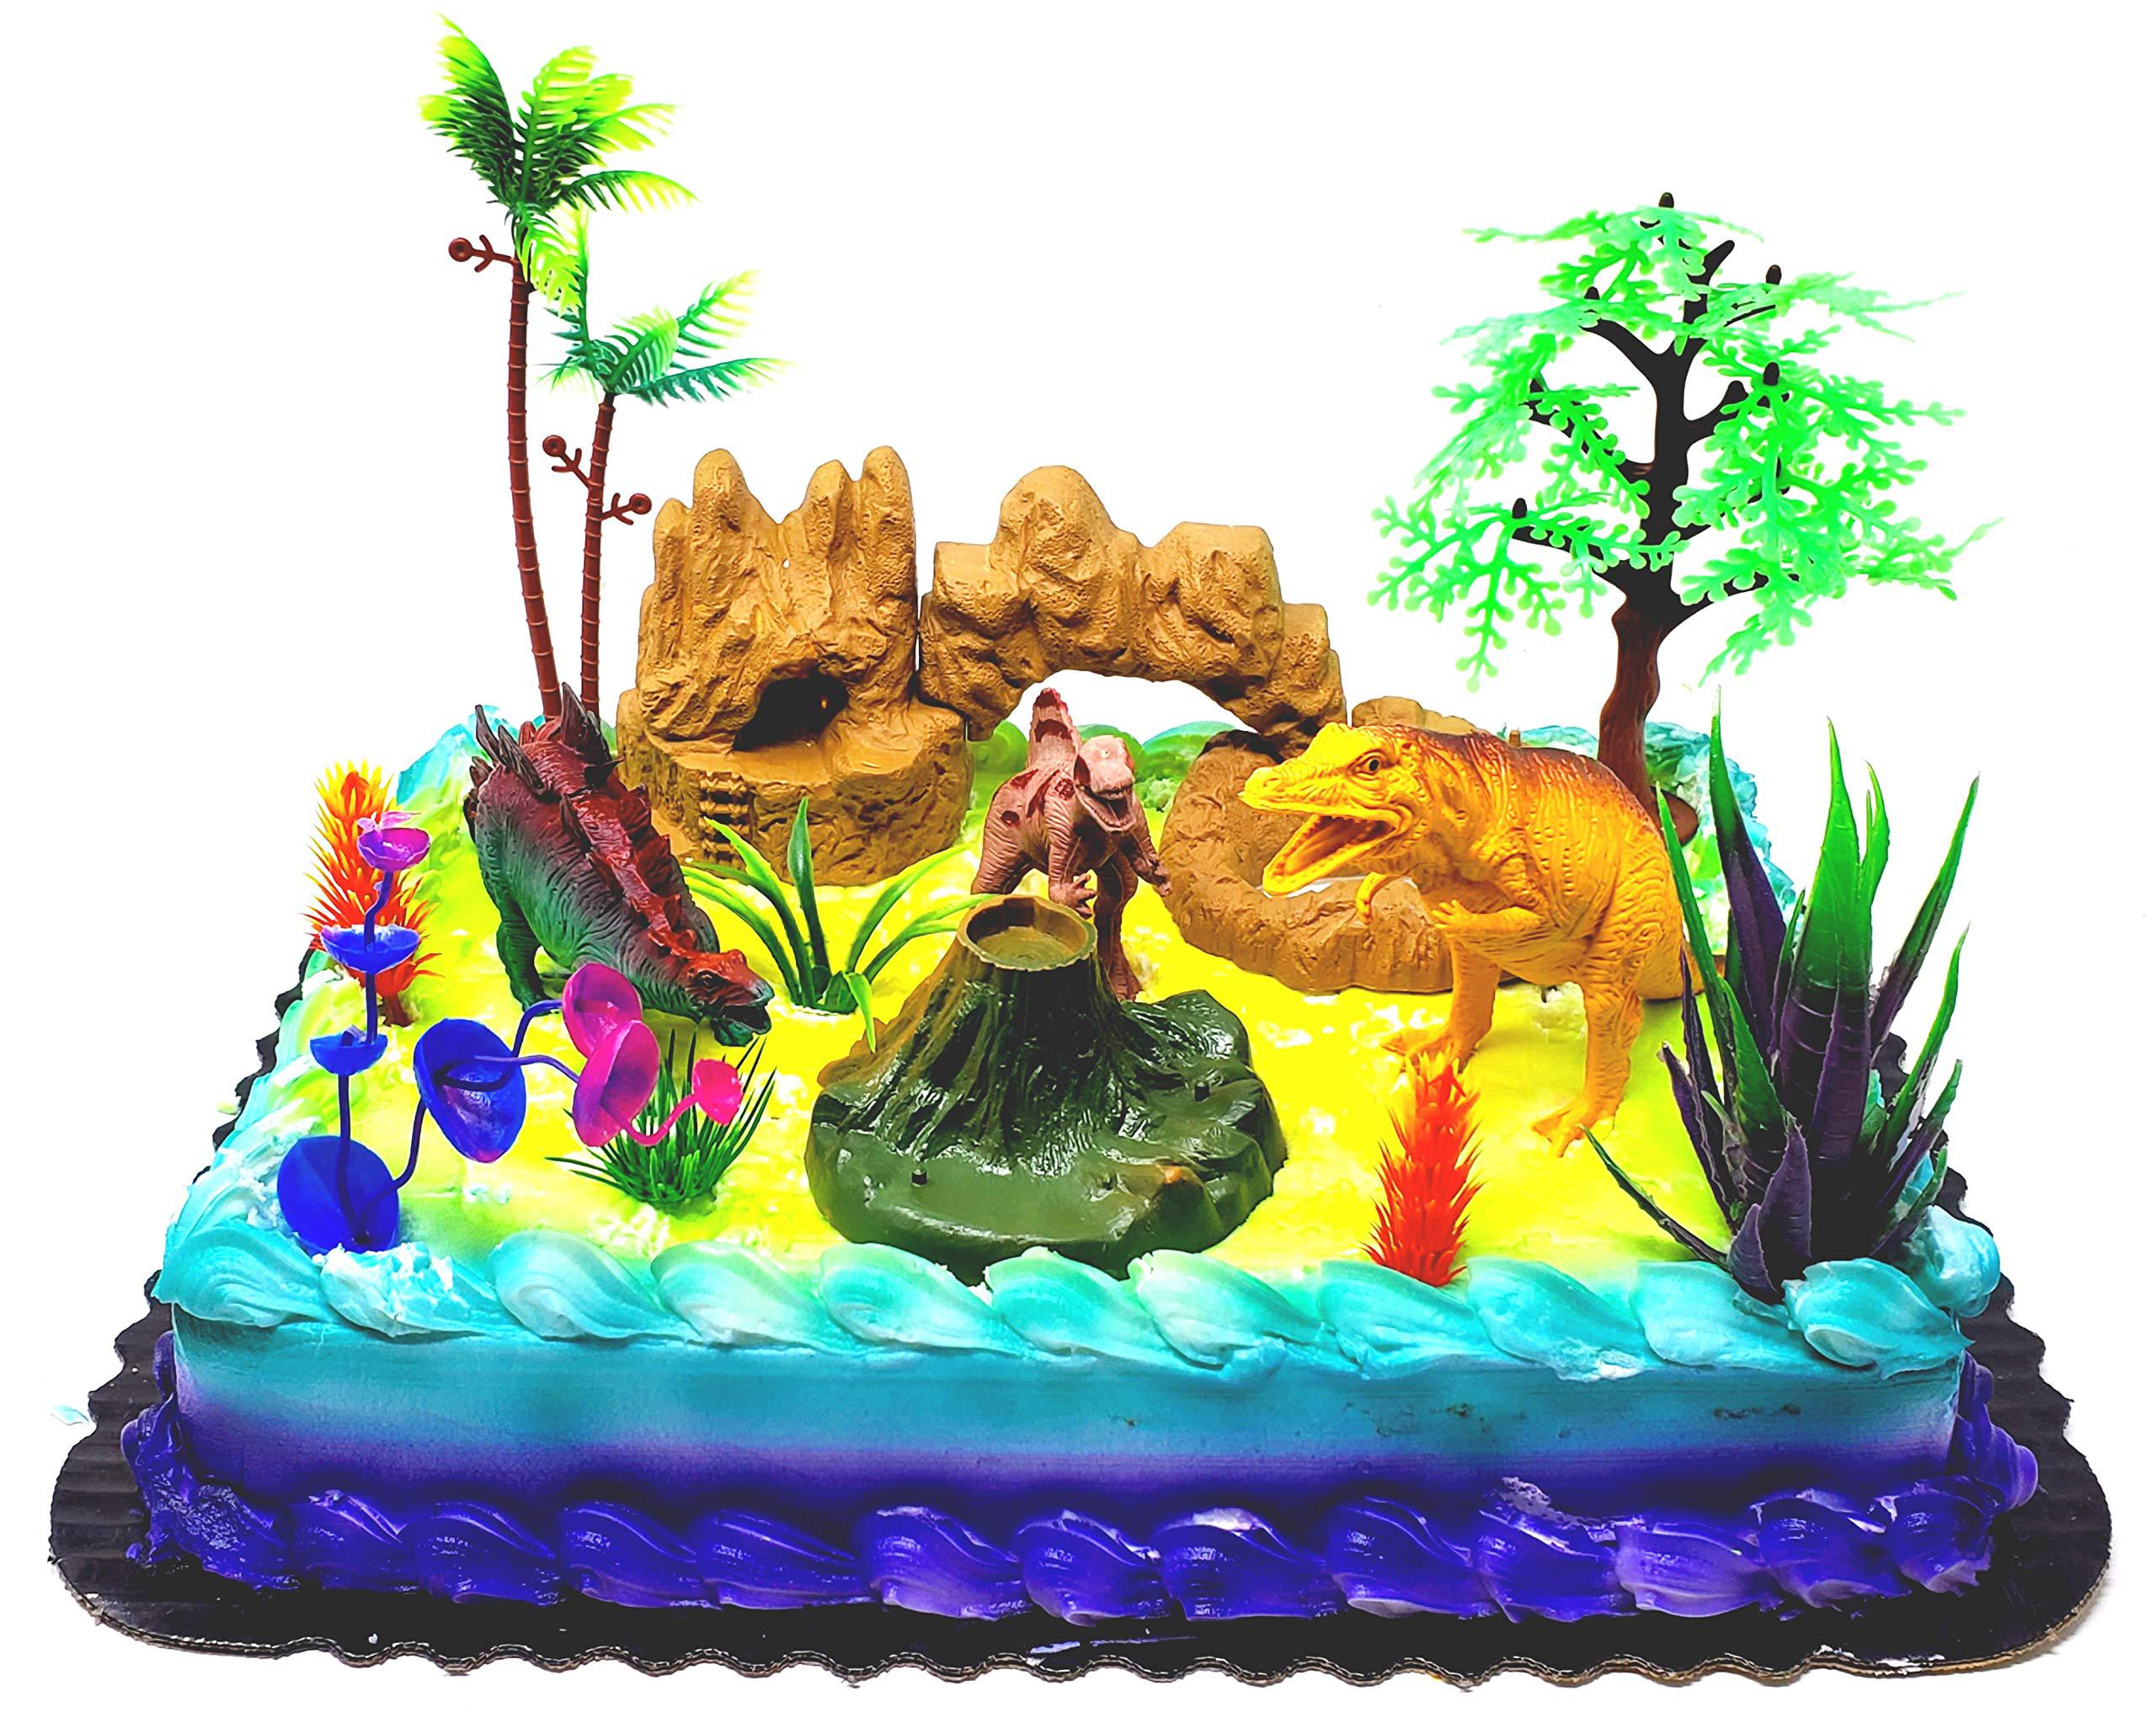 Dinosaur prehistoric roaming dinosaurs 12 piece birthday cake topper set featuring 3 dinosaur figures, themed decorative accessories, 